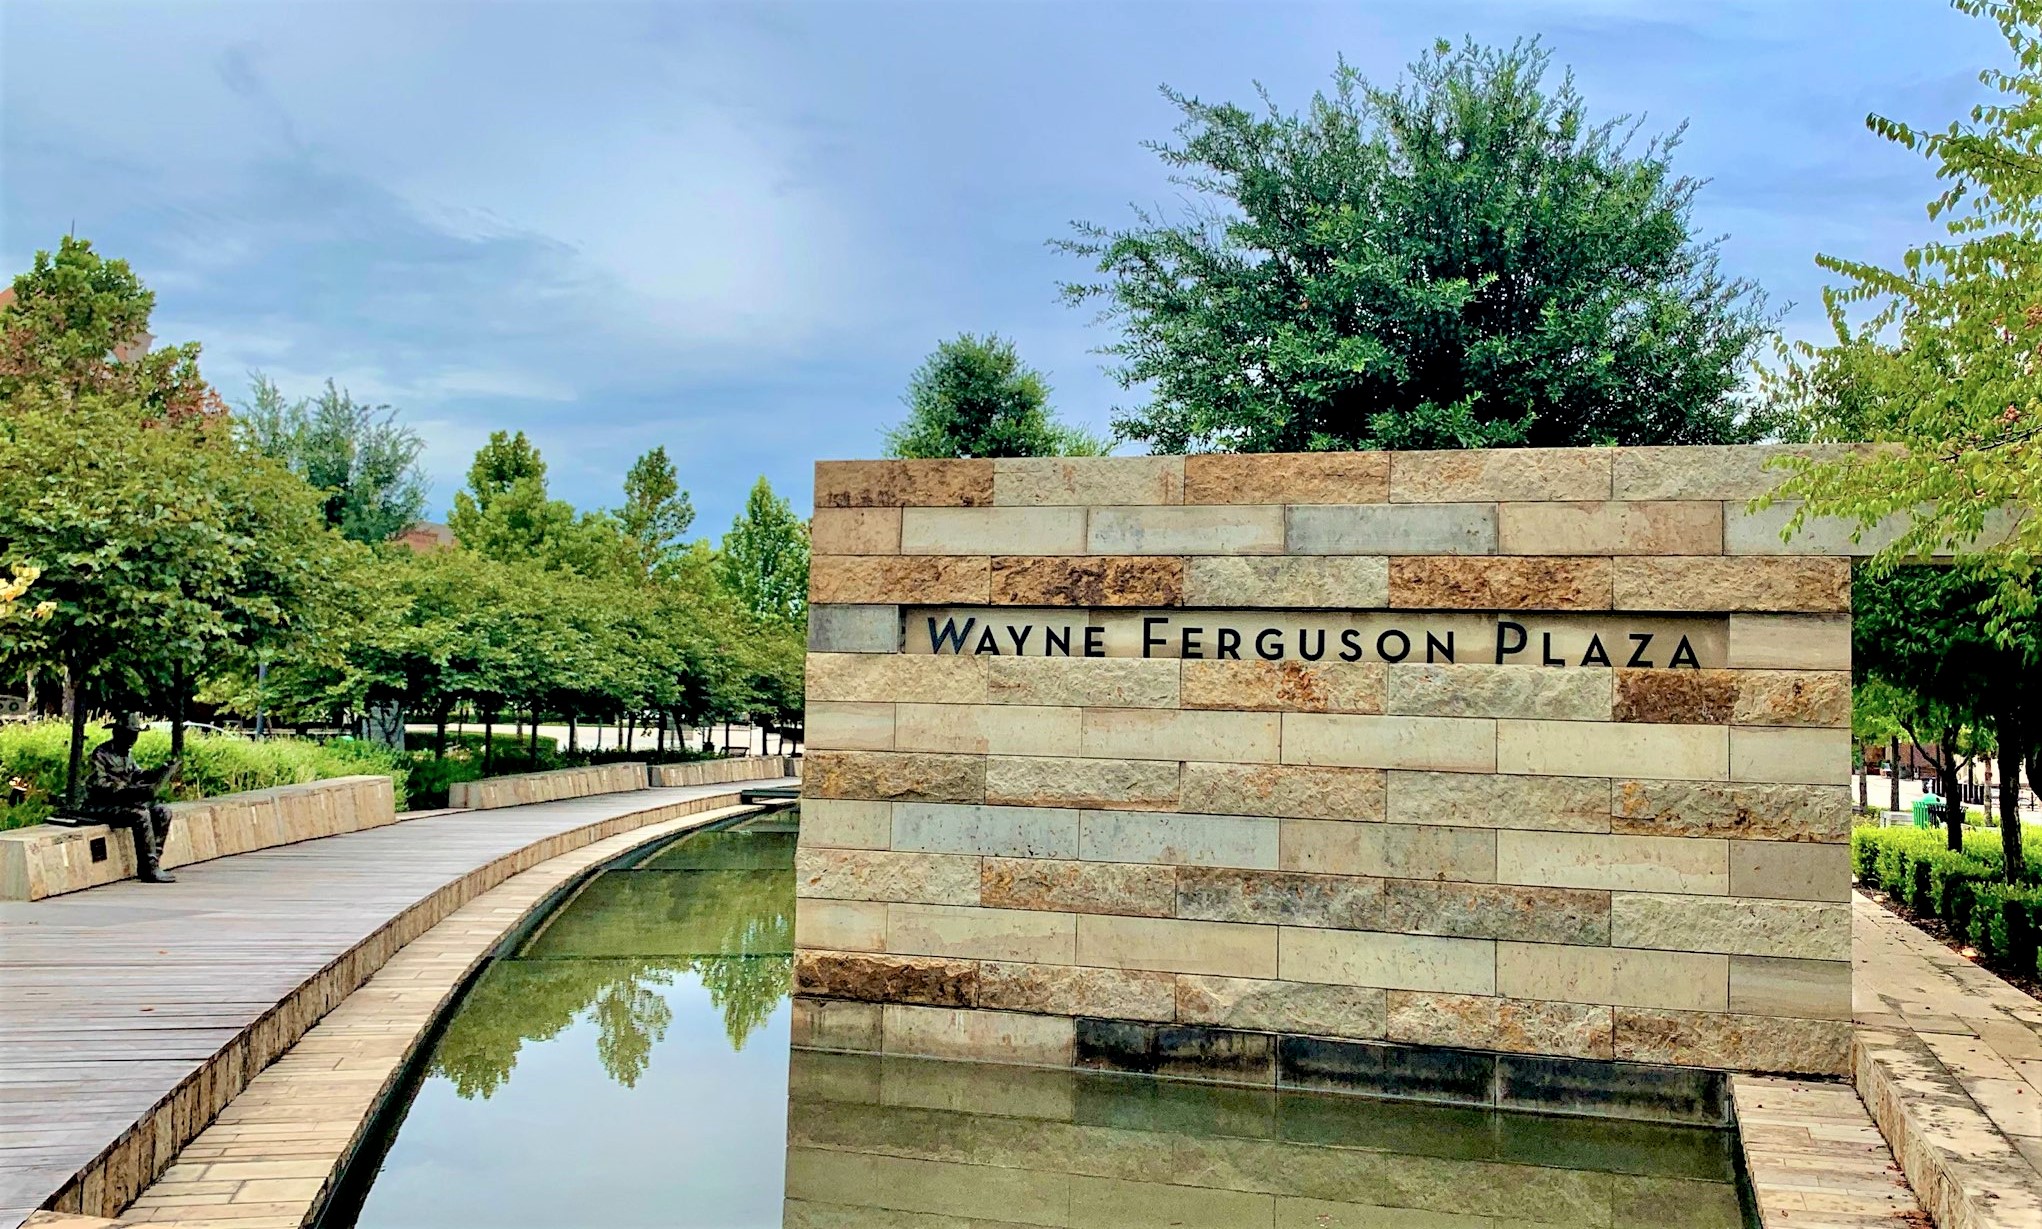 Wayne Ferguson Plaza entrance